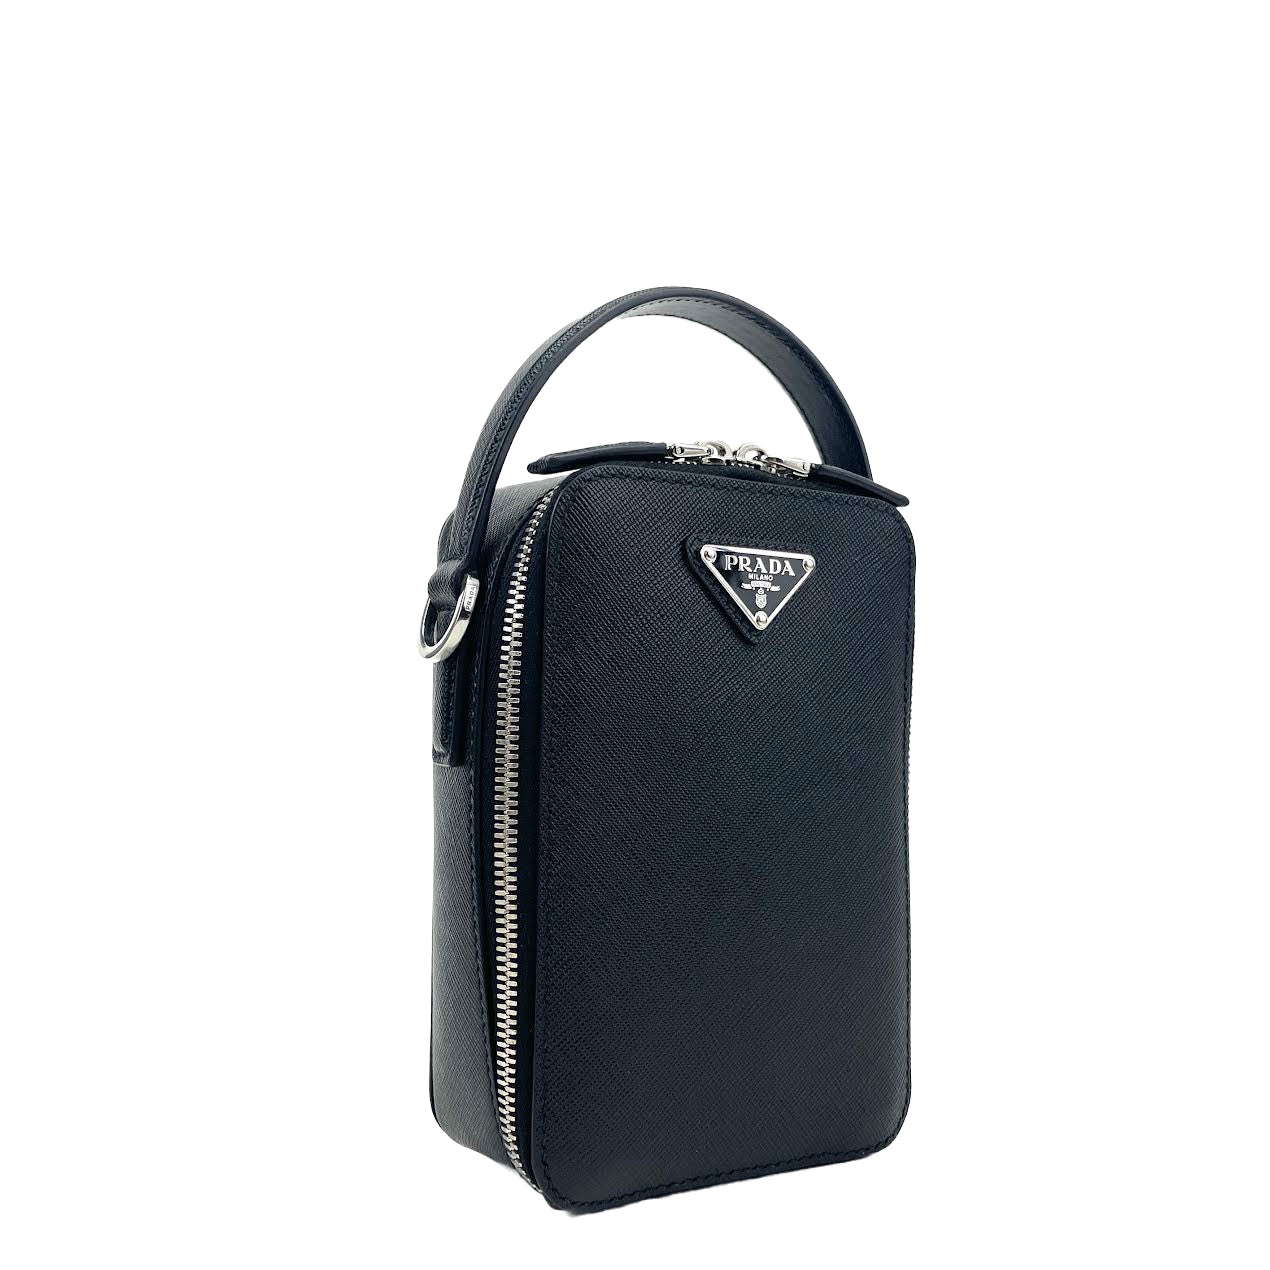 Small Prada Brique Bag Black For Women 7.4 in / 19 cm